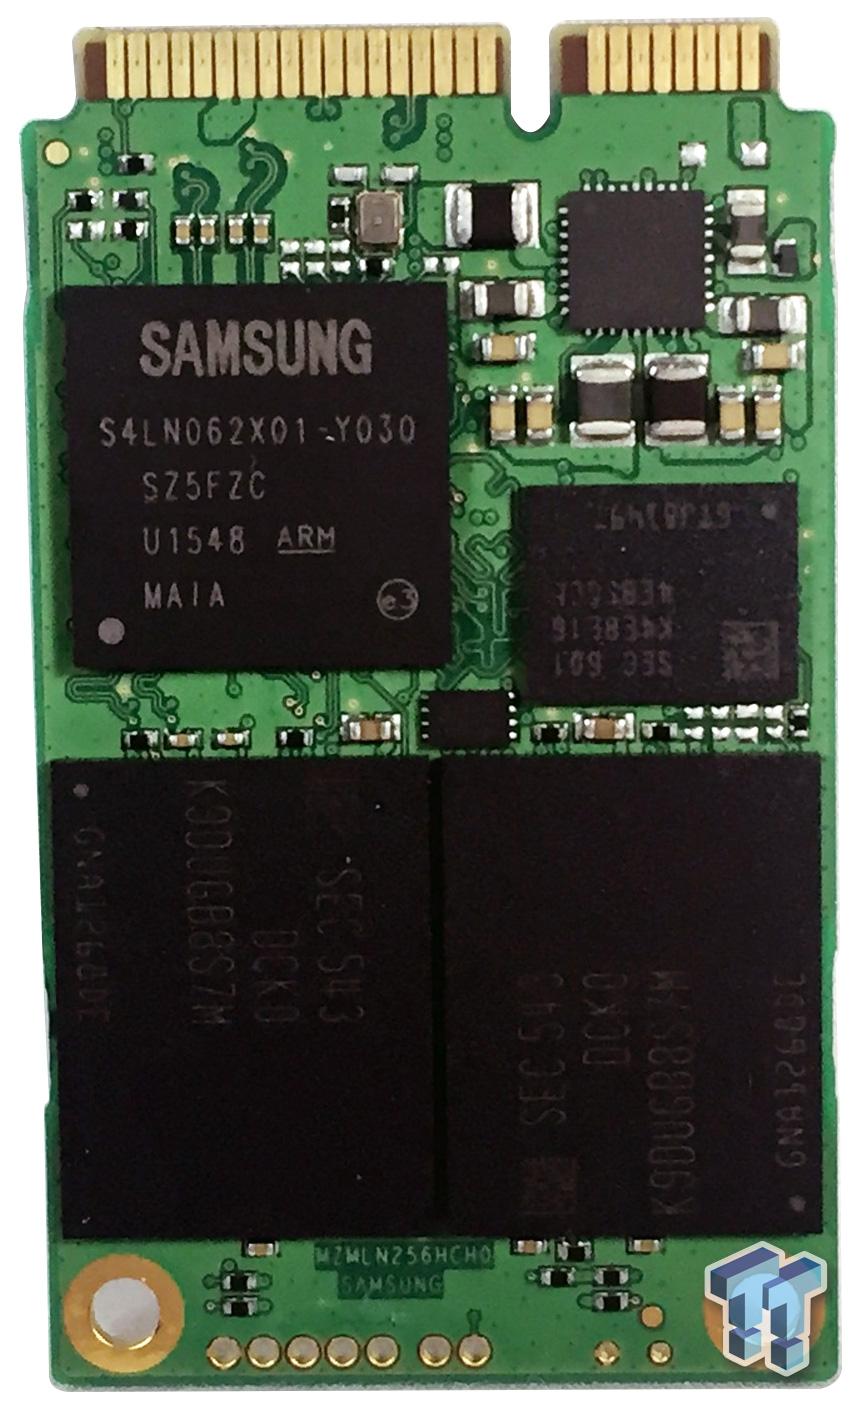 Comparatif Samsung T3 500 Go contre Crucial X6 4 To 